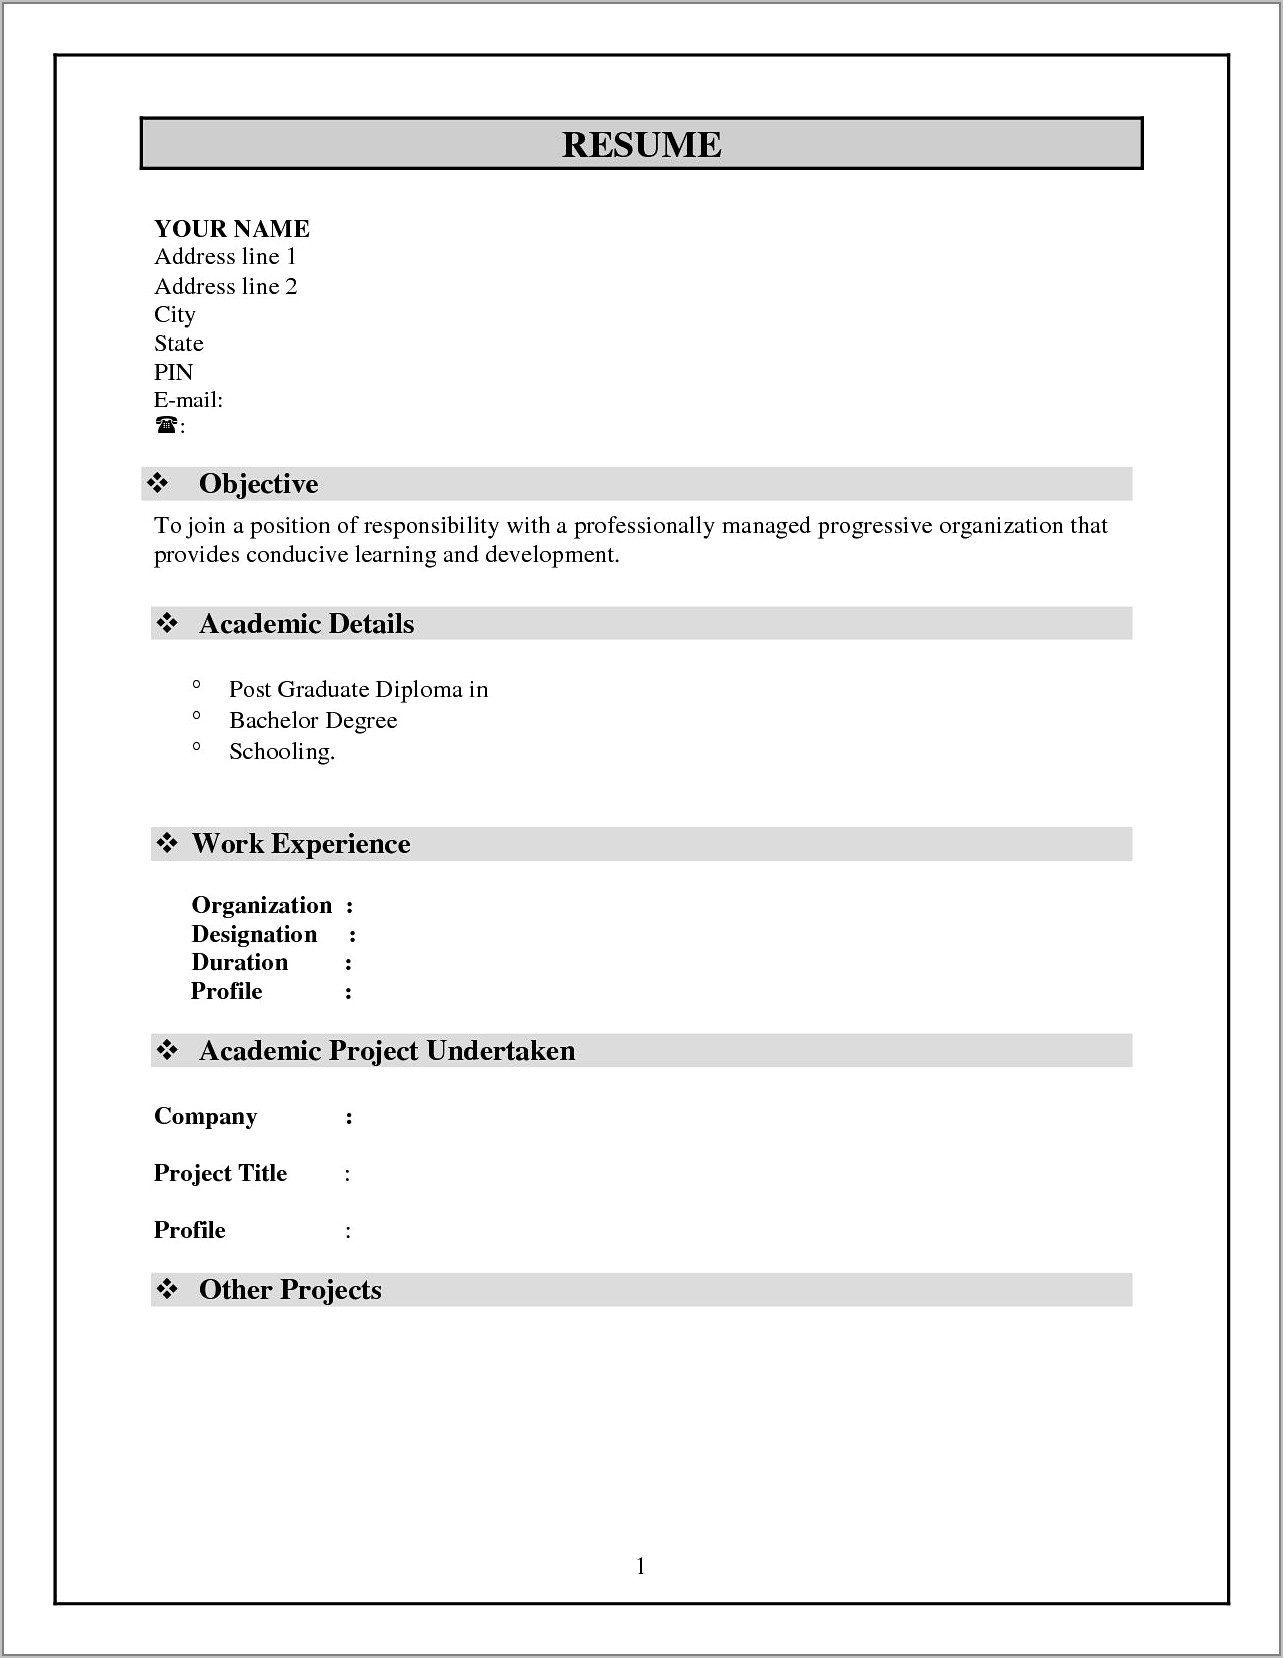 Resume Sample Doc Free Download